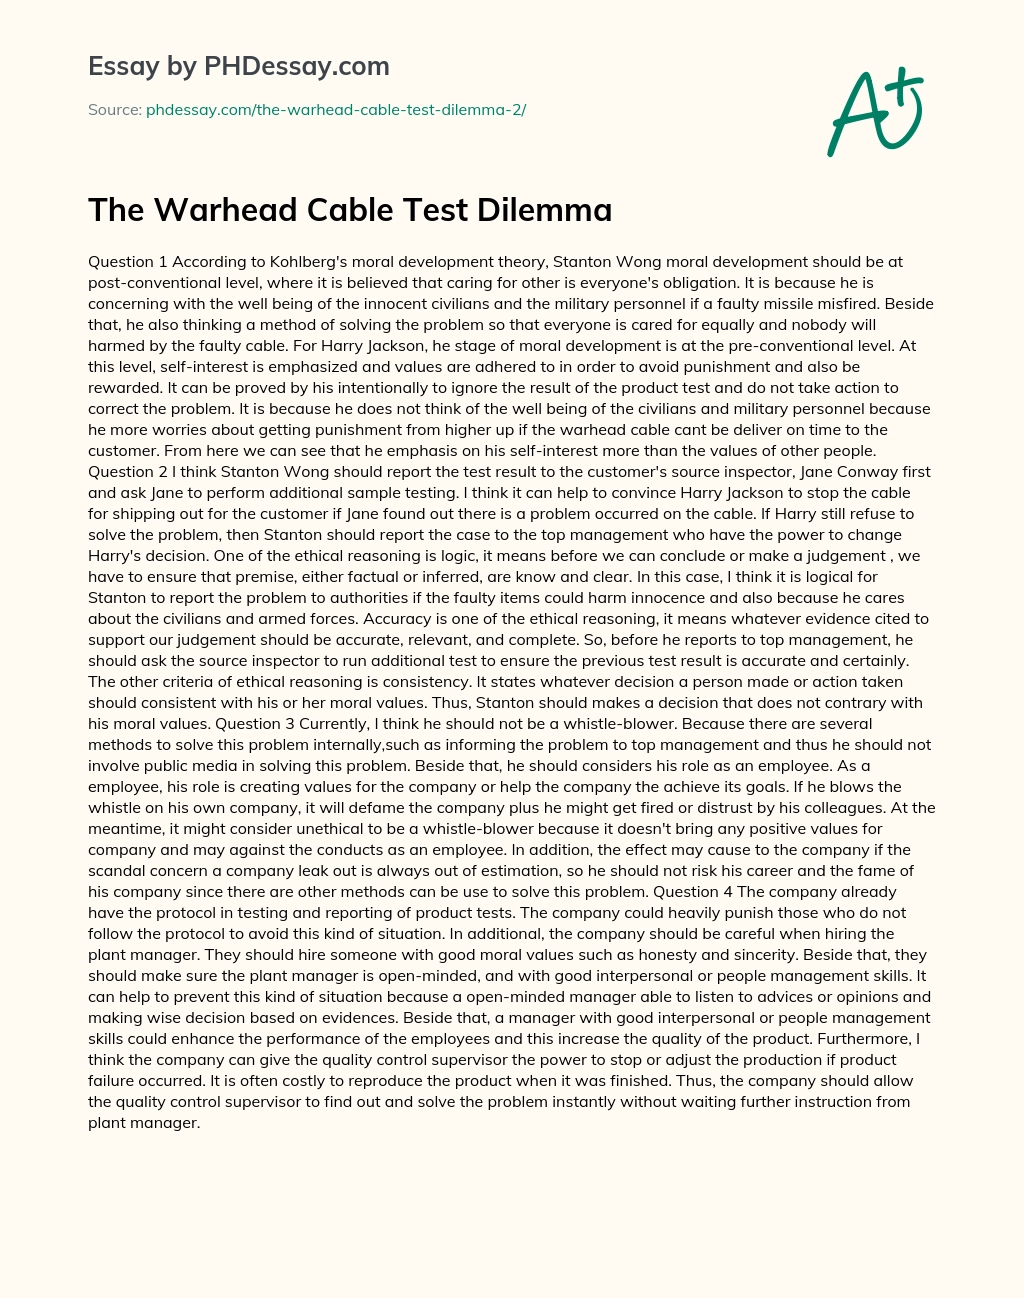 The Warhead Cable Test Dilemma Persuasive Essay essay